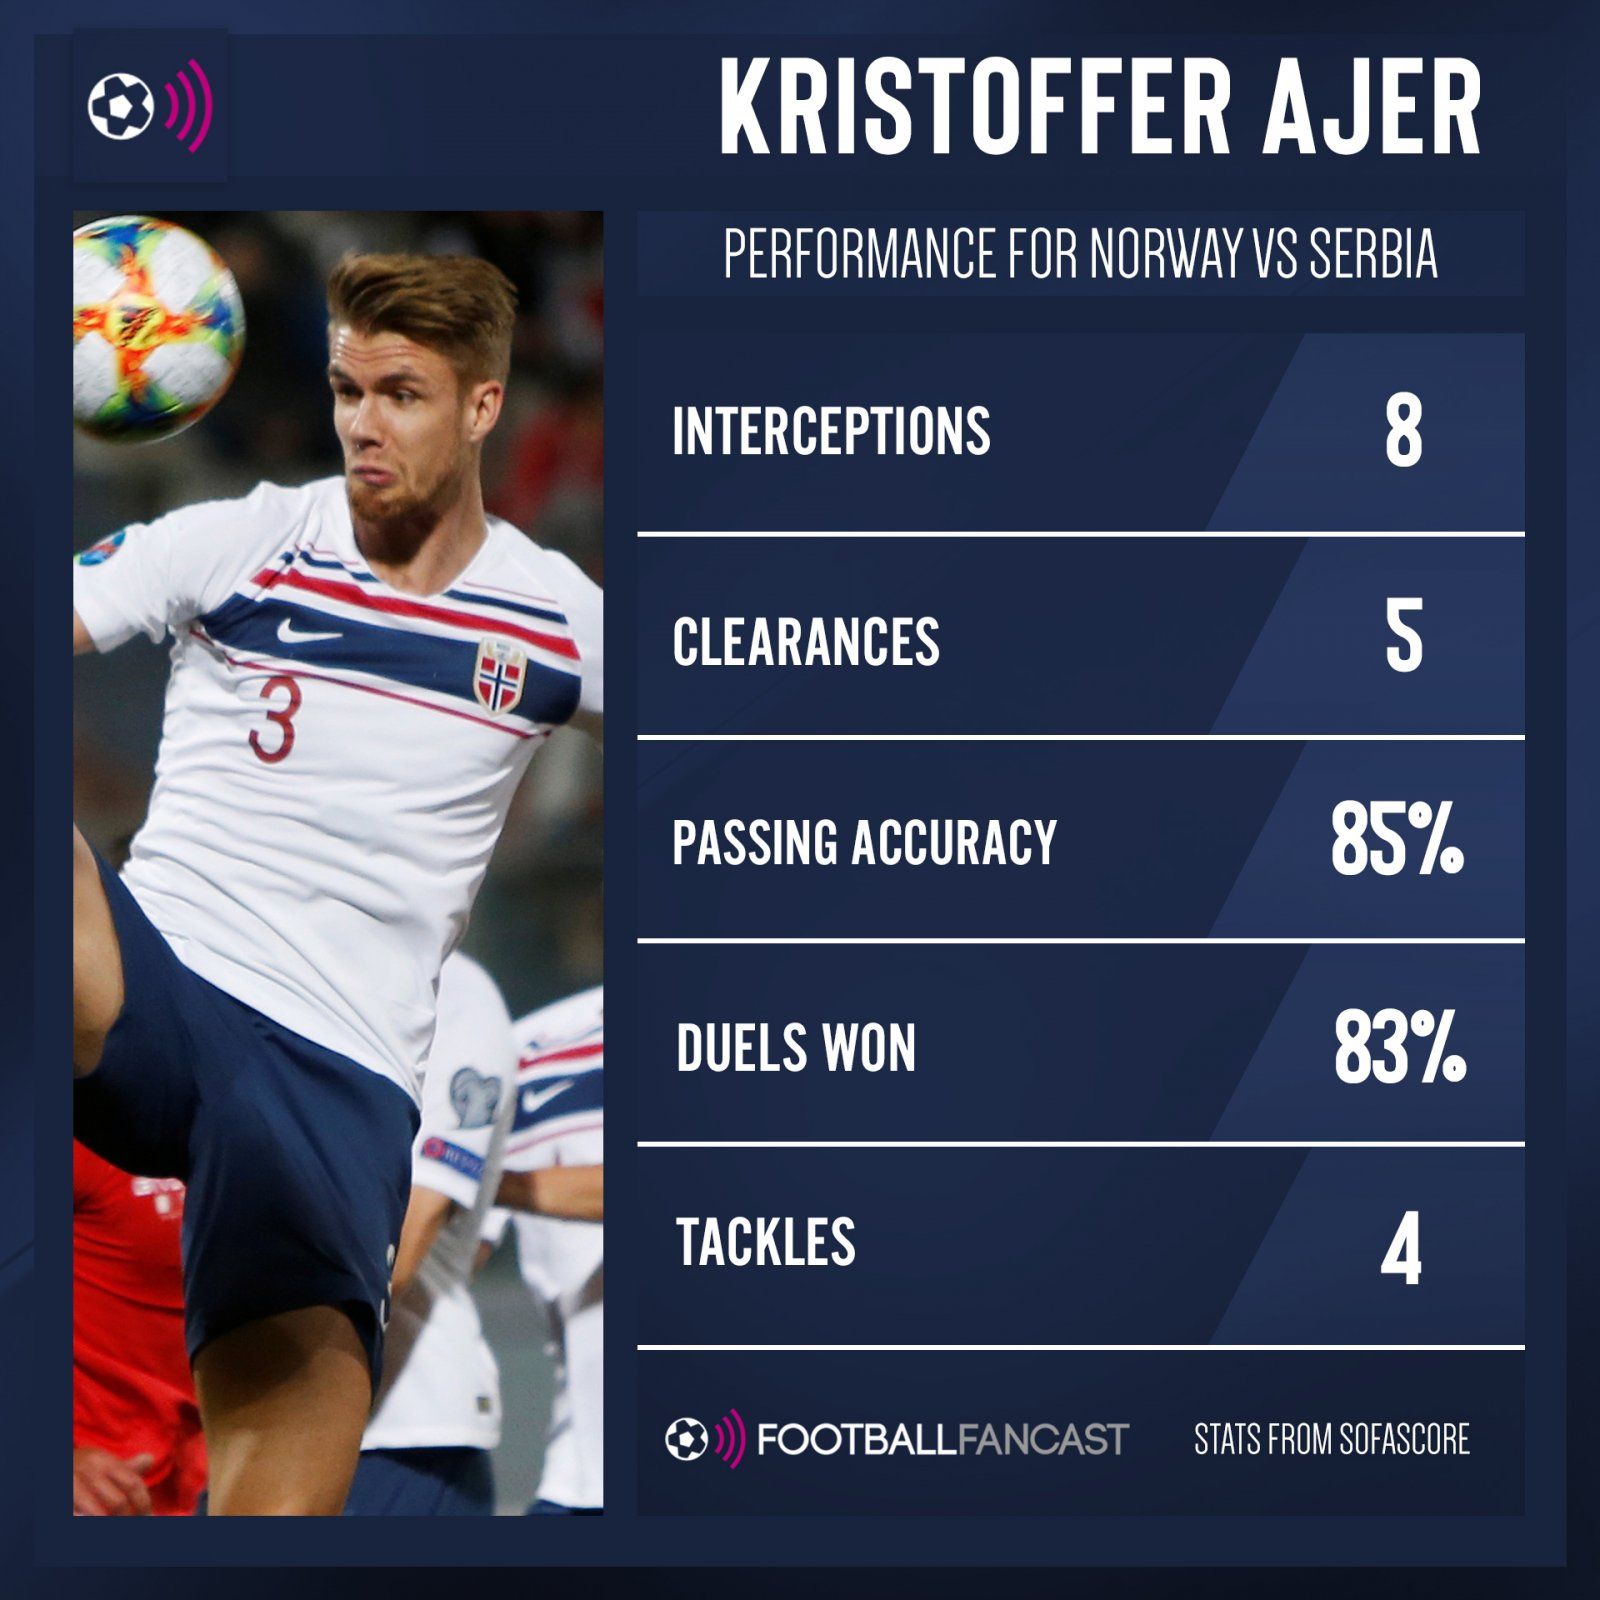 Kristoffer-Ajer-for-Norway-vs-Serbia2